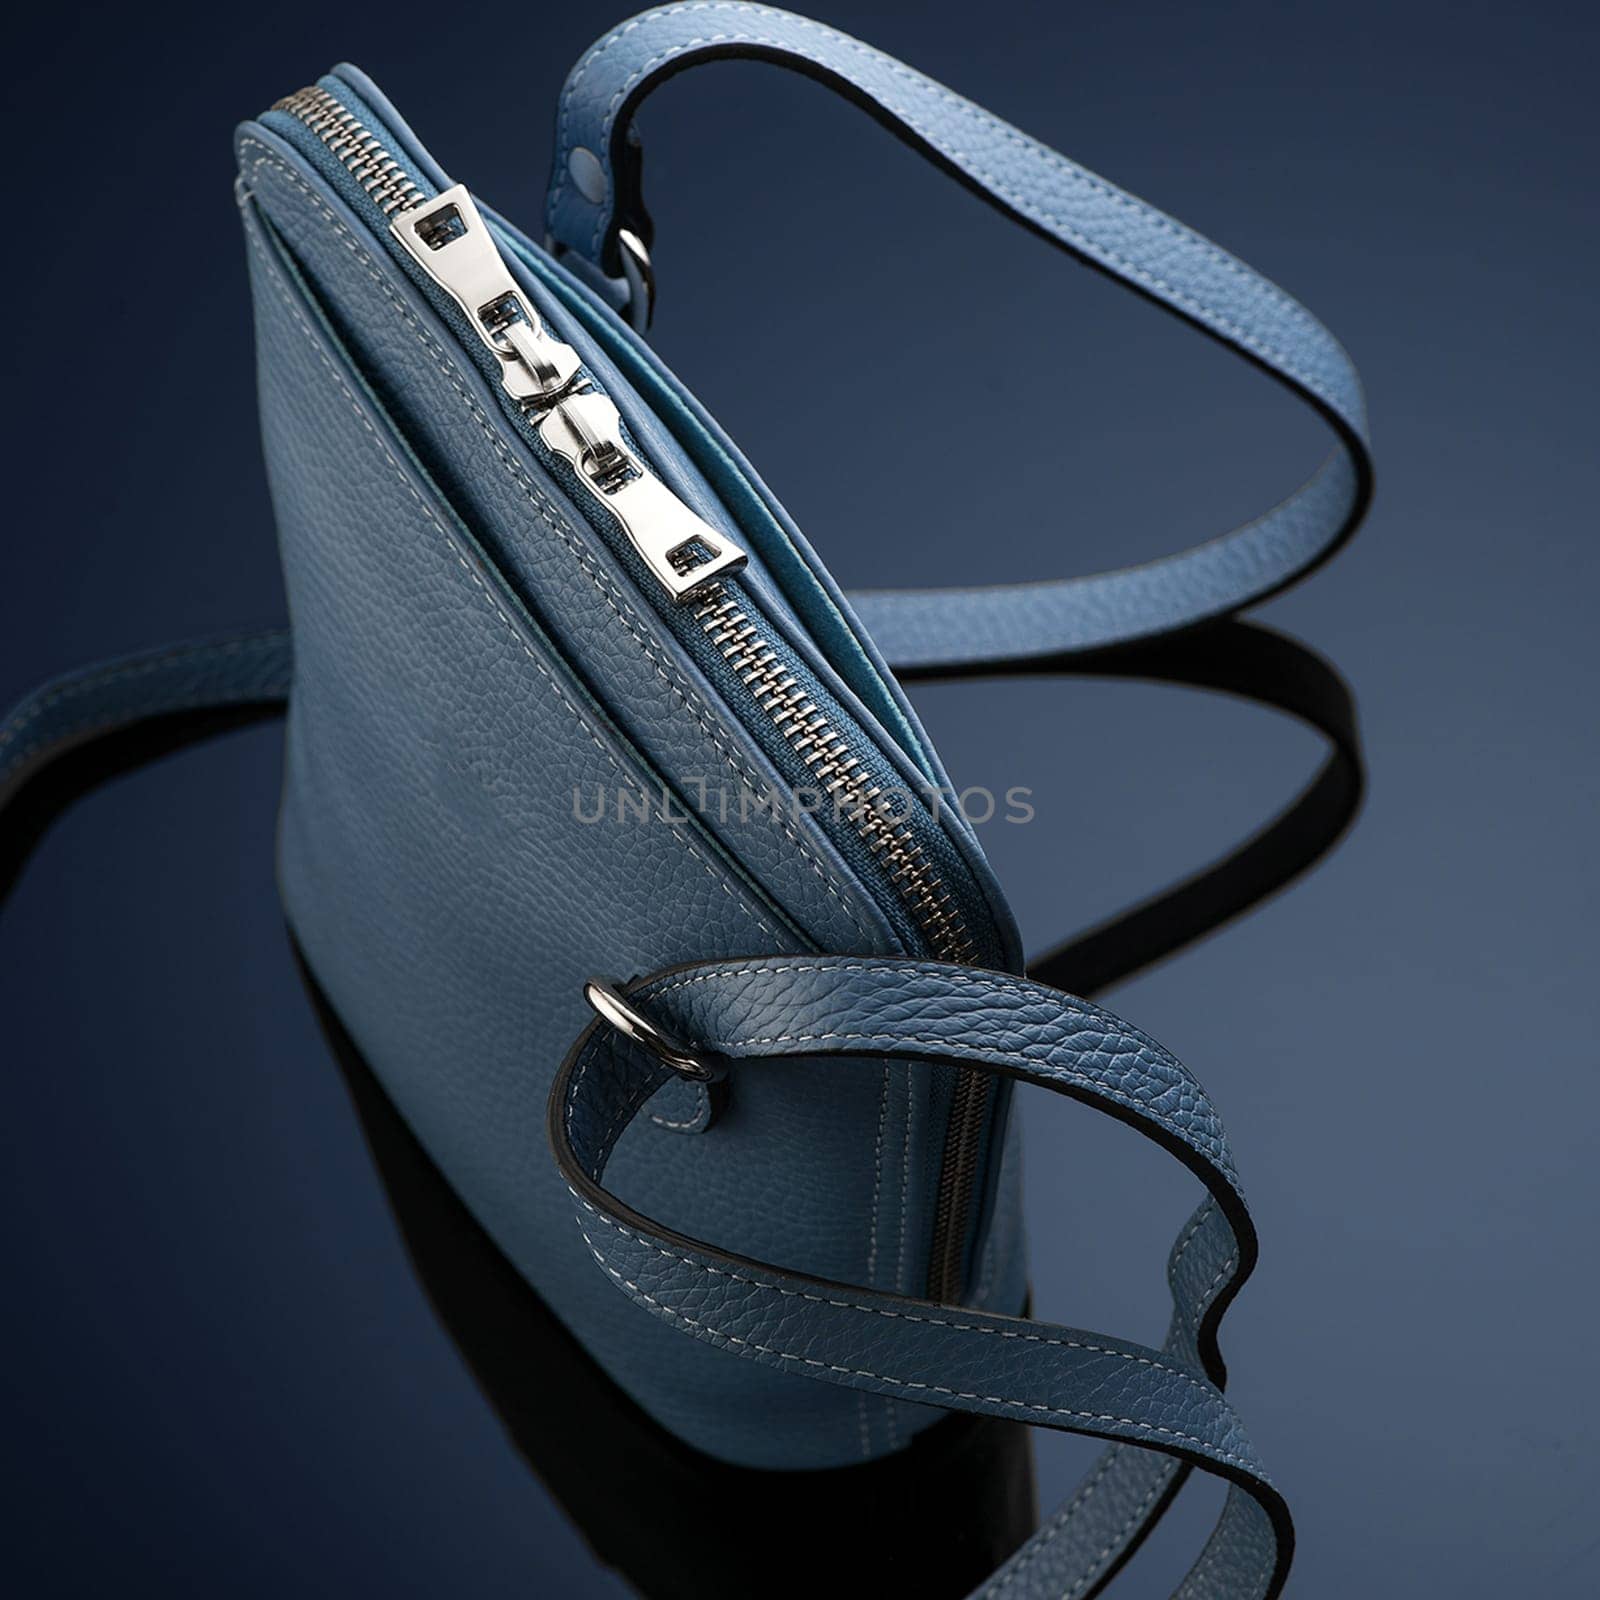 A closeup shot of a luxury blue leather bag by A_Karim